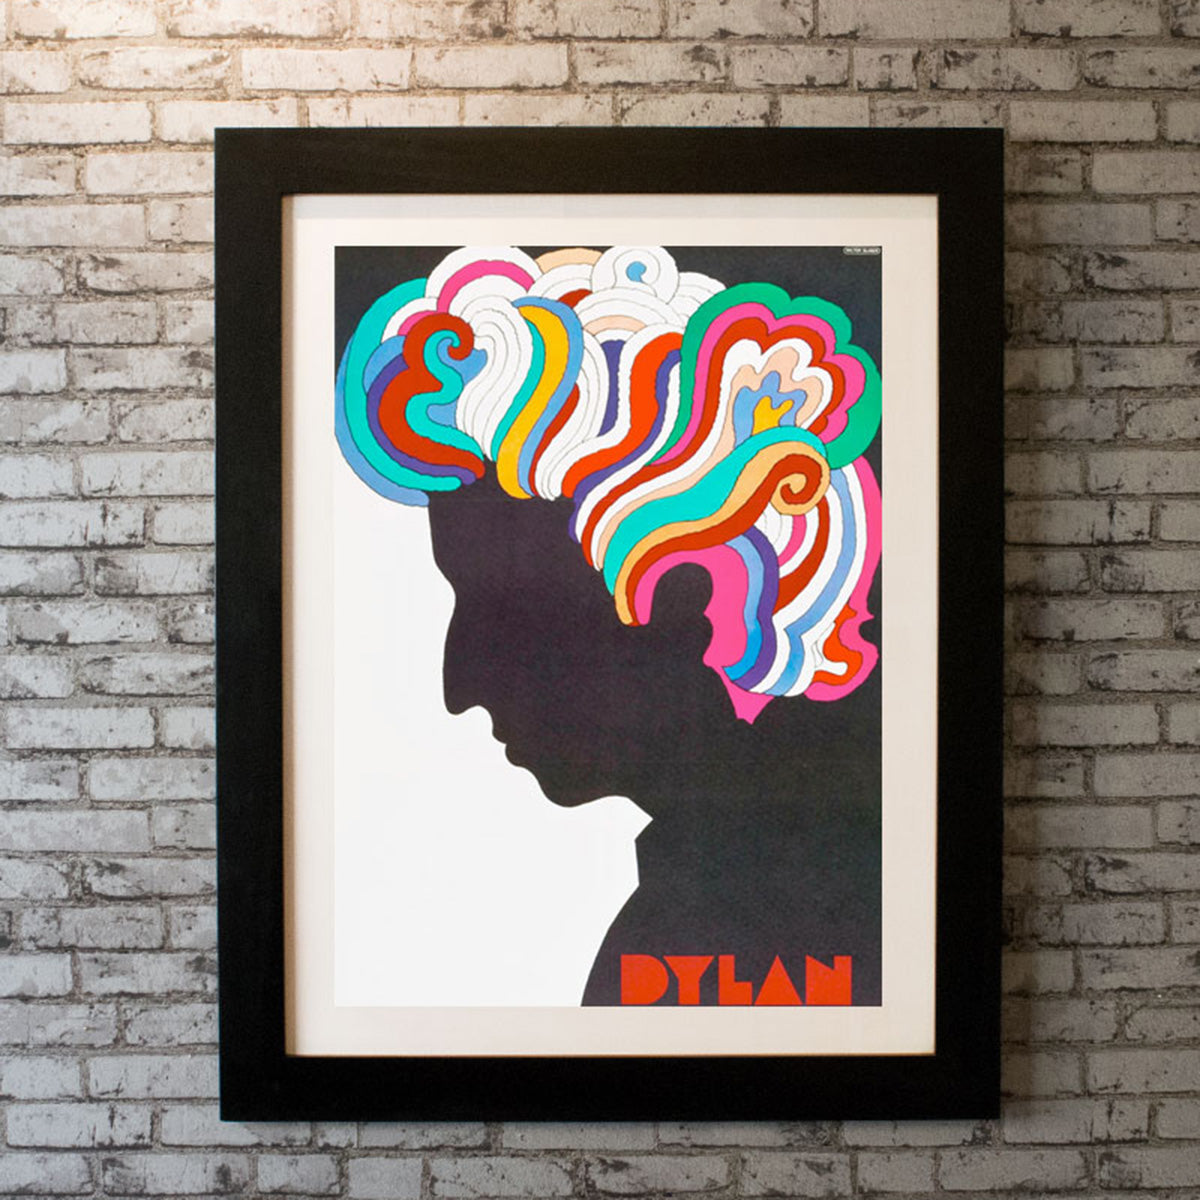 Original Movie Poster of Bob Dylan (milton GlaseR) (1966)